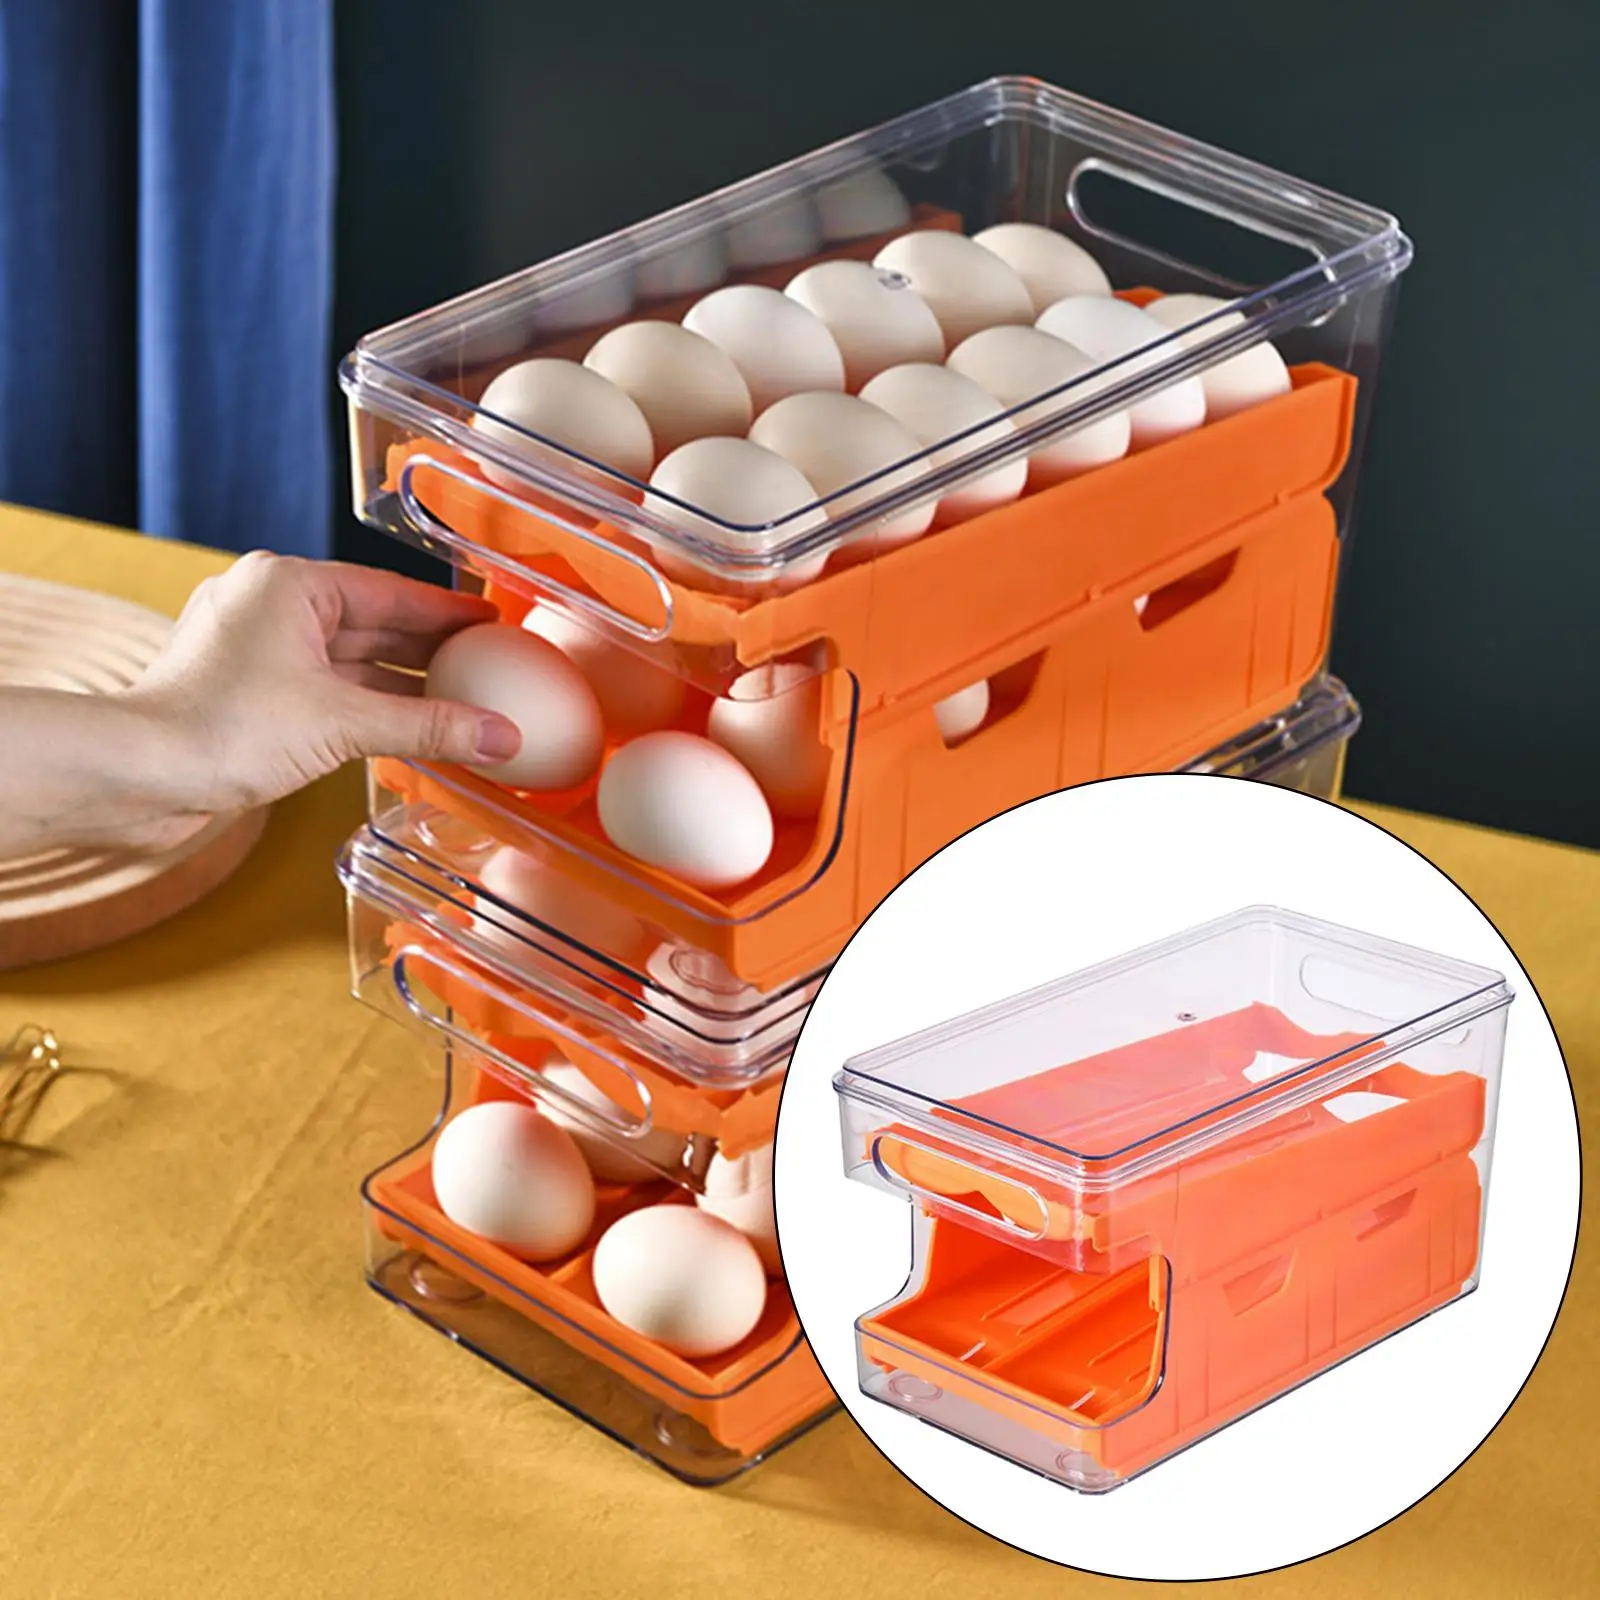 Egg Storage Box Auto Rolling Down Double Track Organizer for Refrigerator